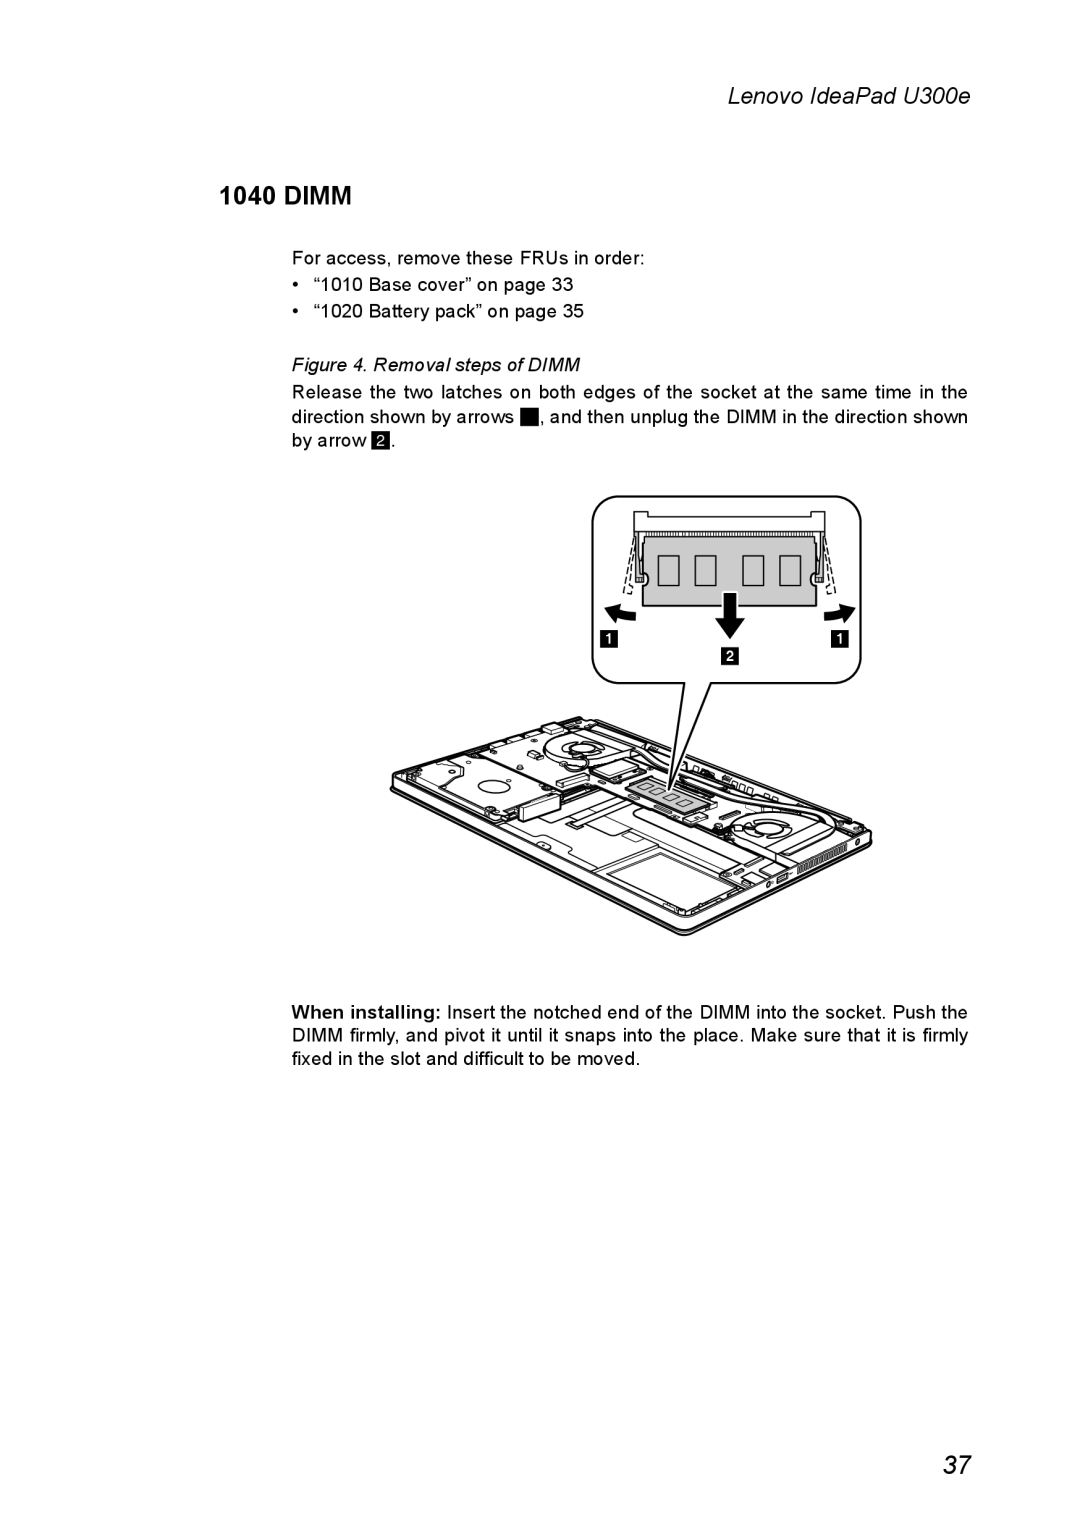 Lenovo U300E manual Dimm, Removal steps of DIMM, Lenovo IdeaPad U300e 